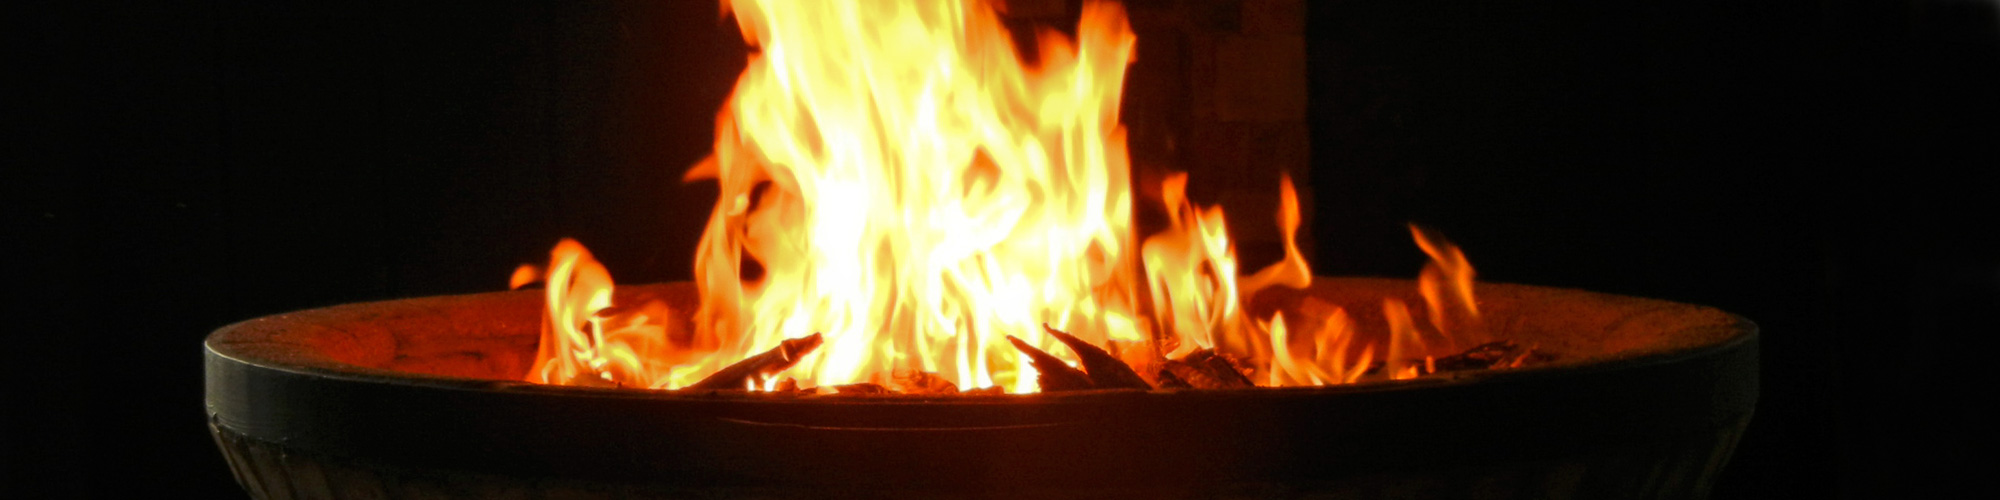 fire-pit-flames